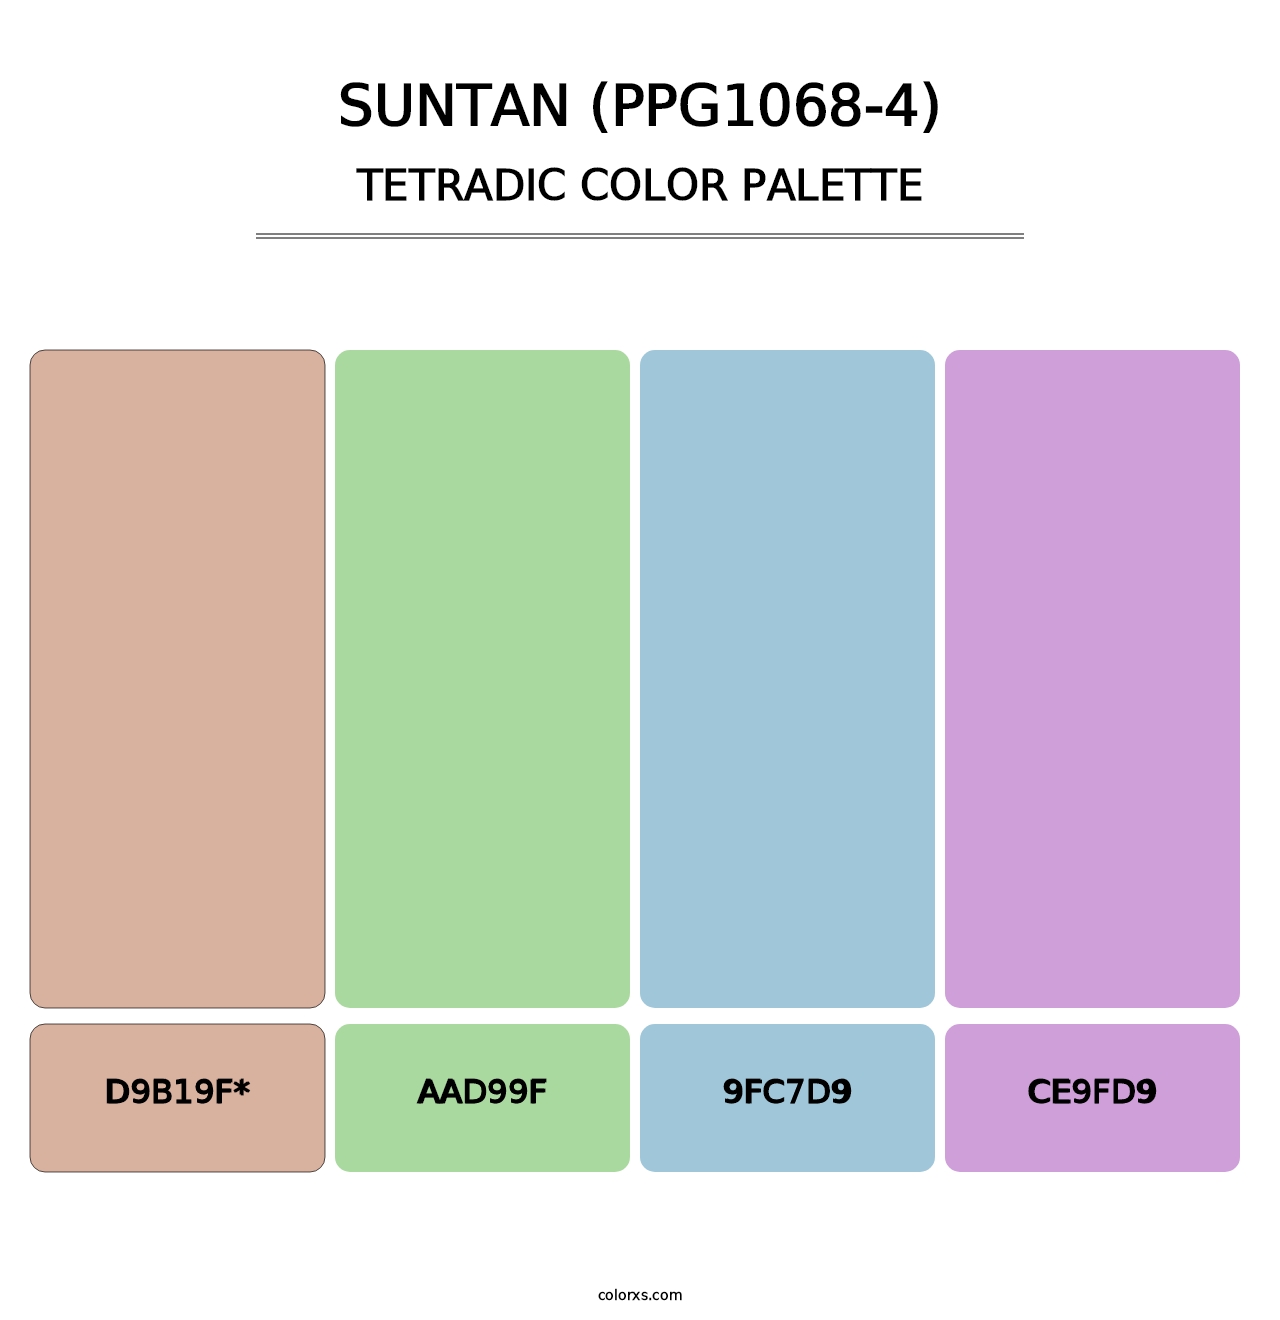 Suntan (PPG1068-4) - Tetradic Color Palette